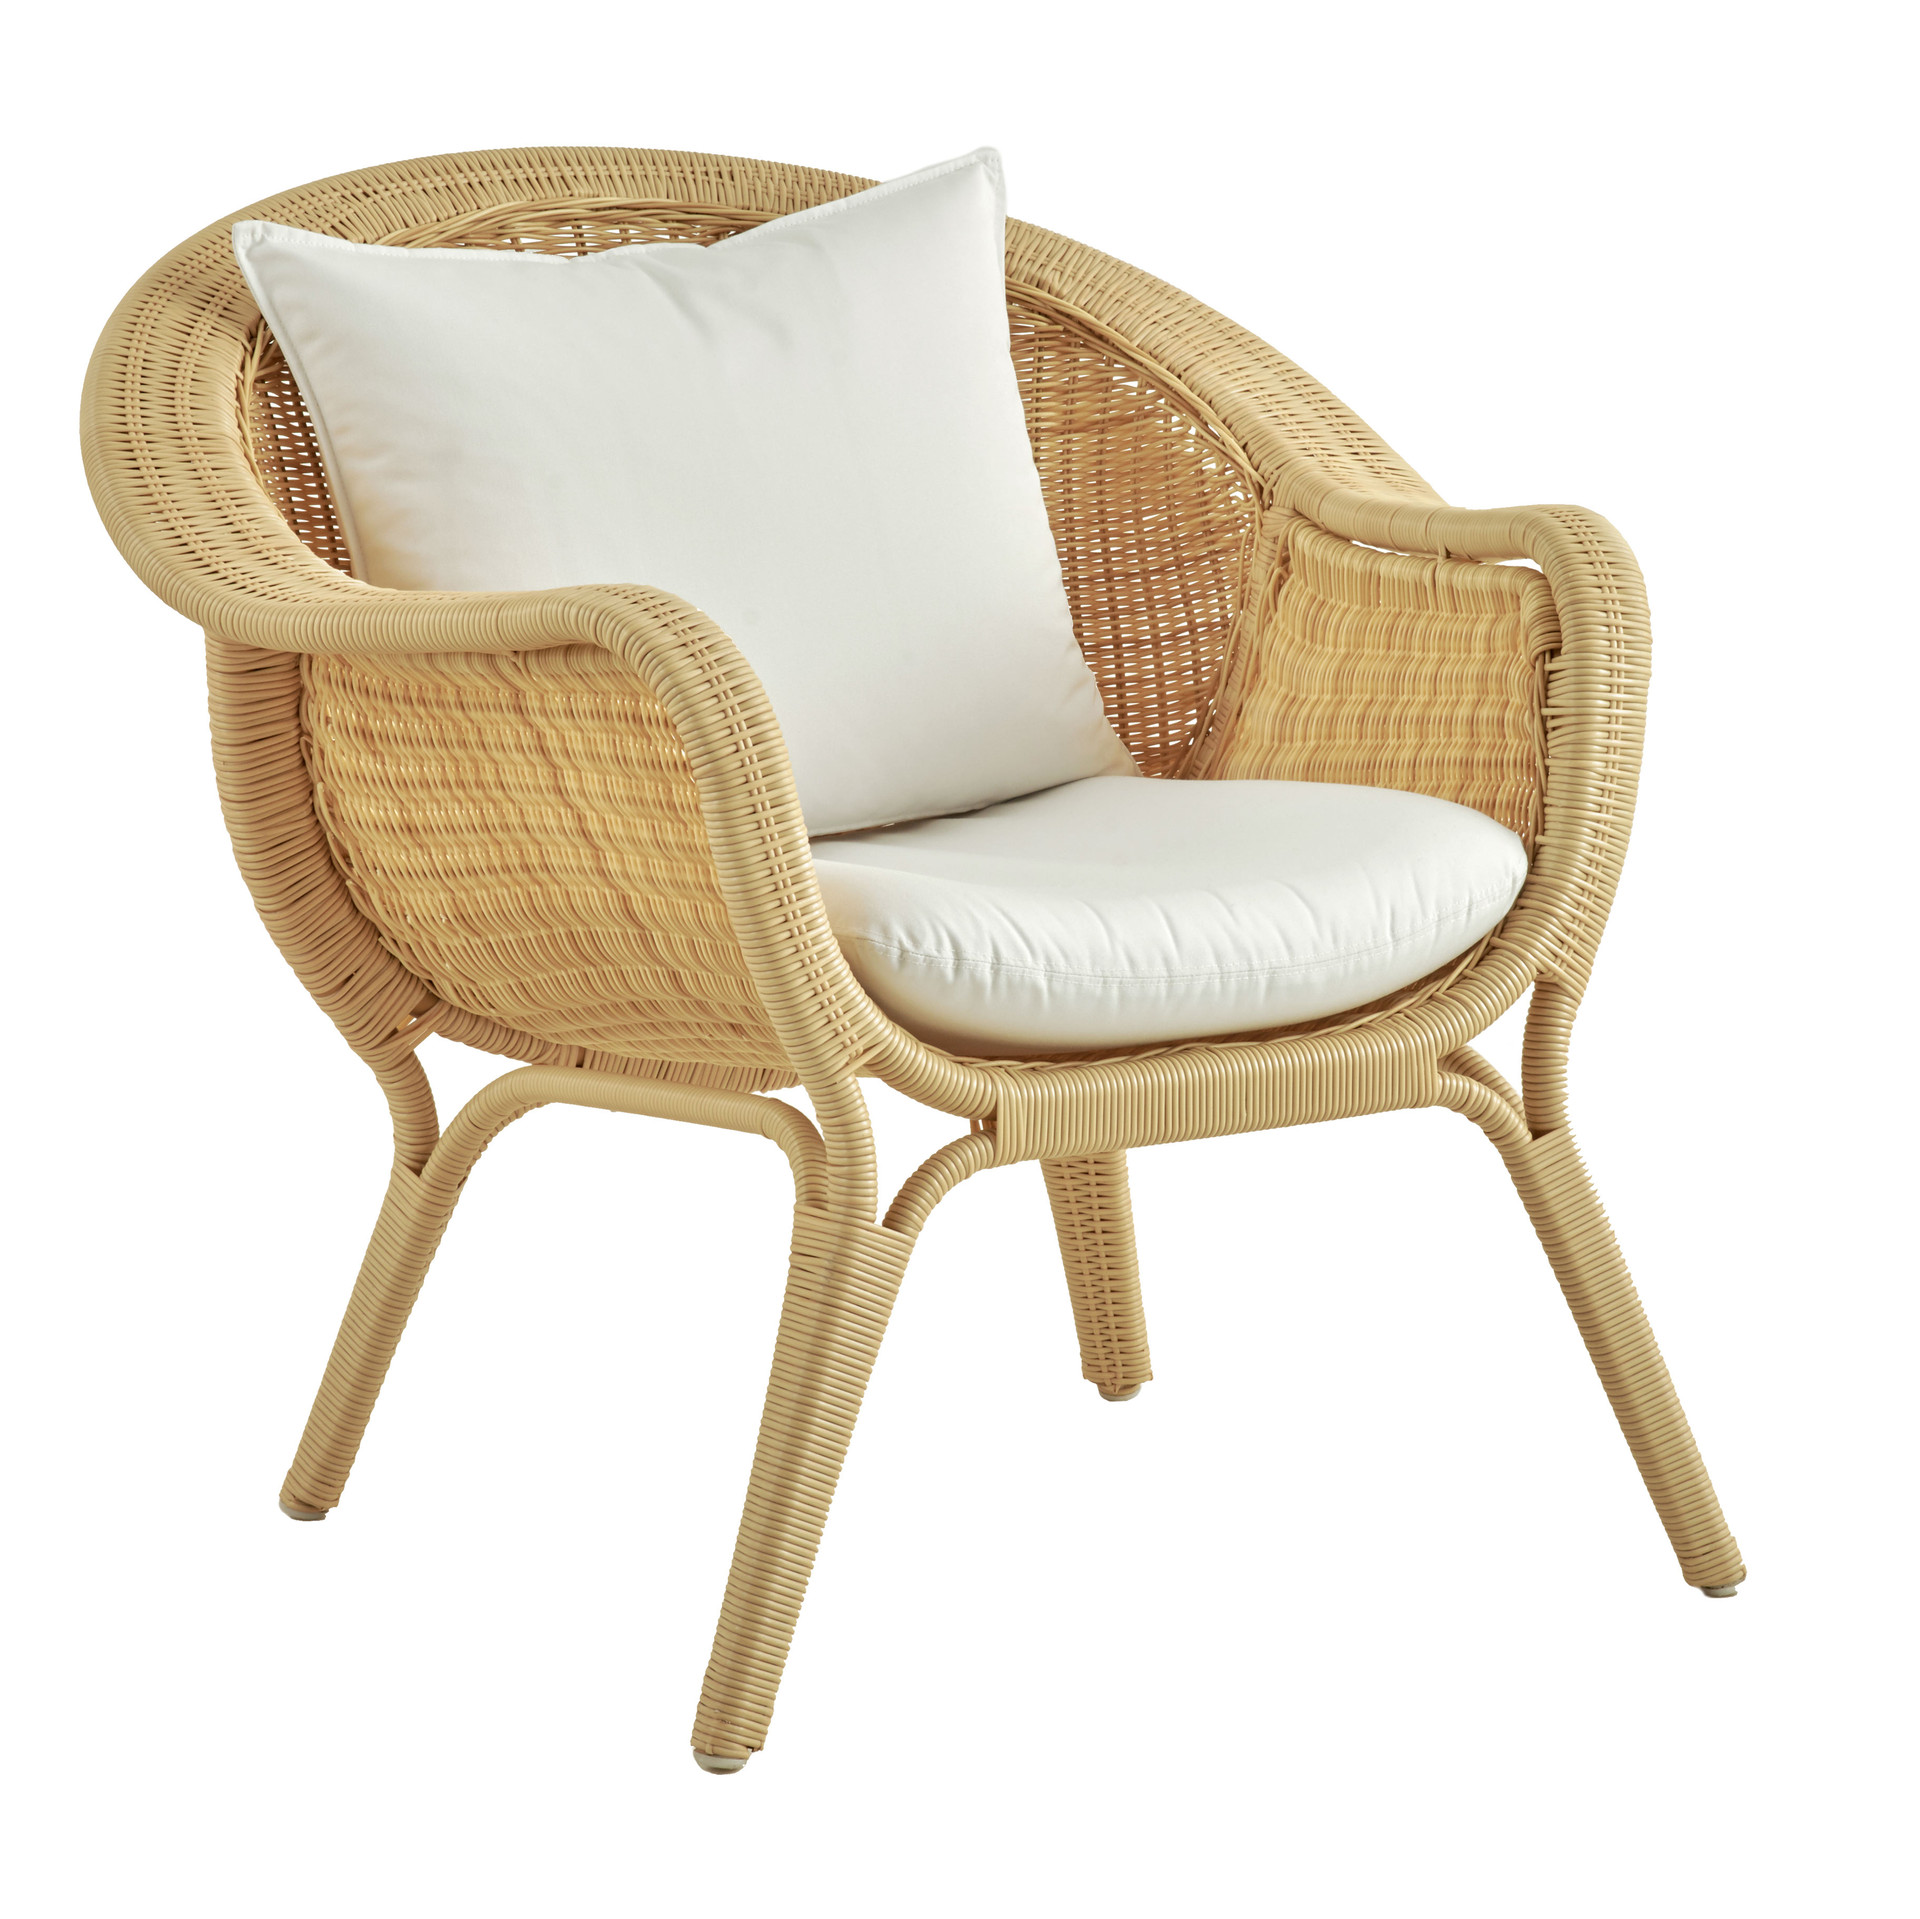 Sika Design Nanna Ditzel Madame Chair Exterior - Outdoor Patio Chair